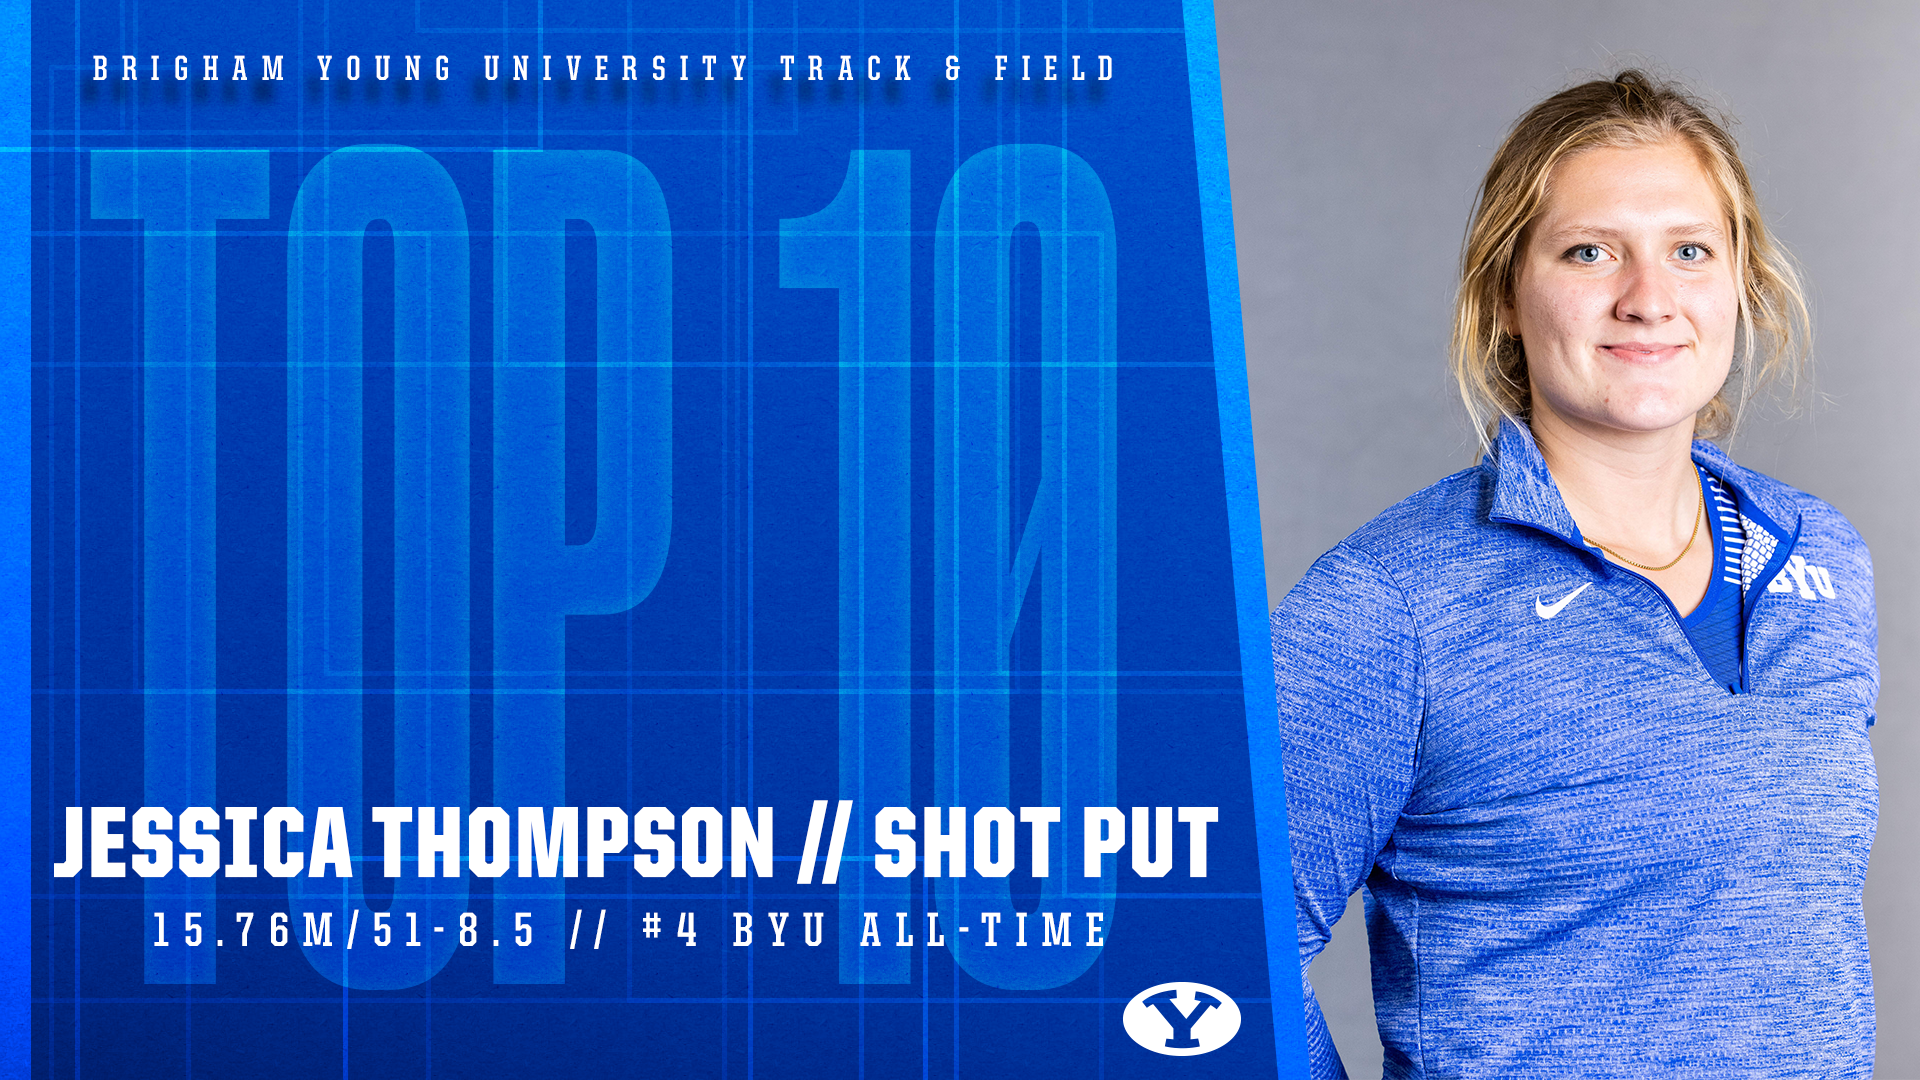 Jessica Thompson #4 shot put all-time